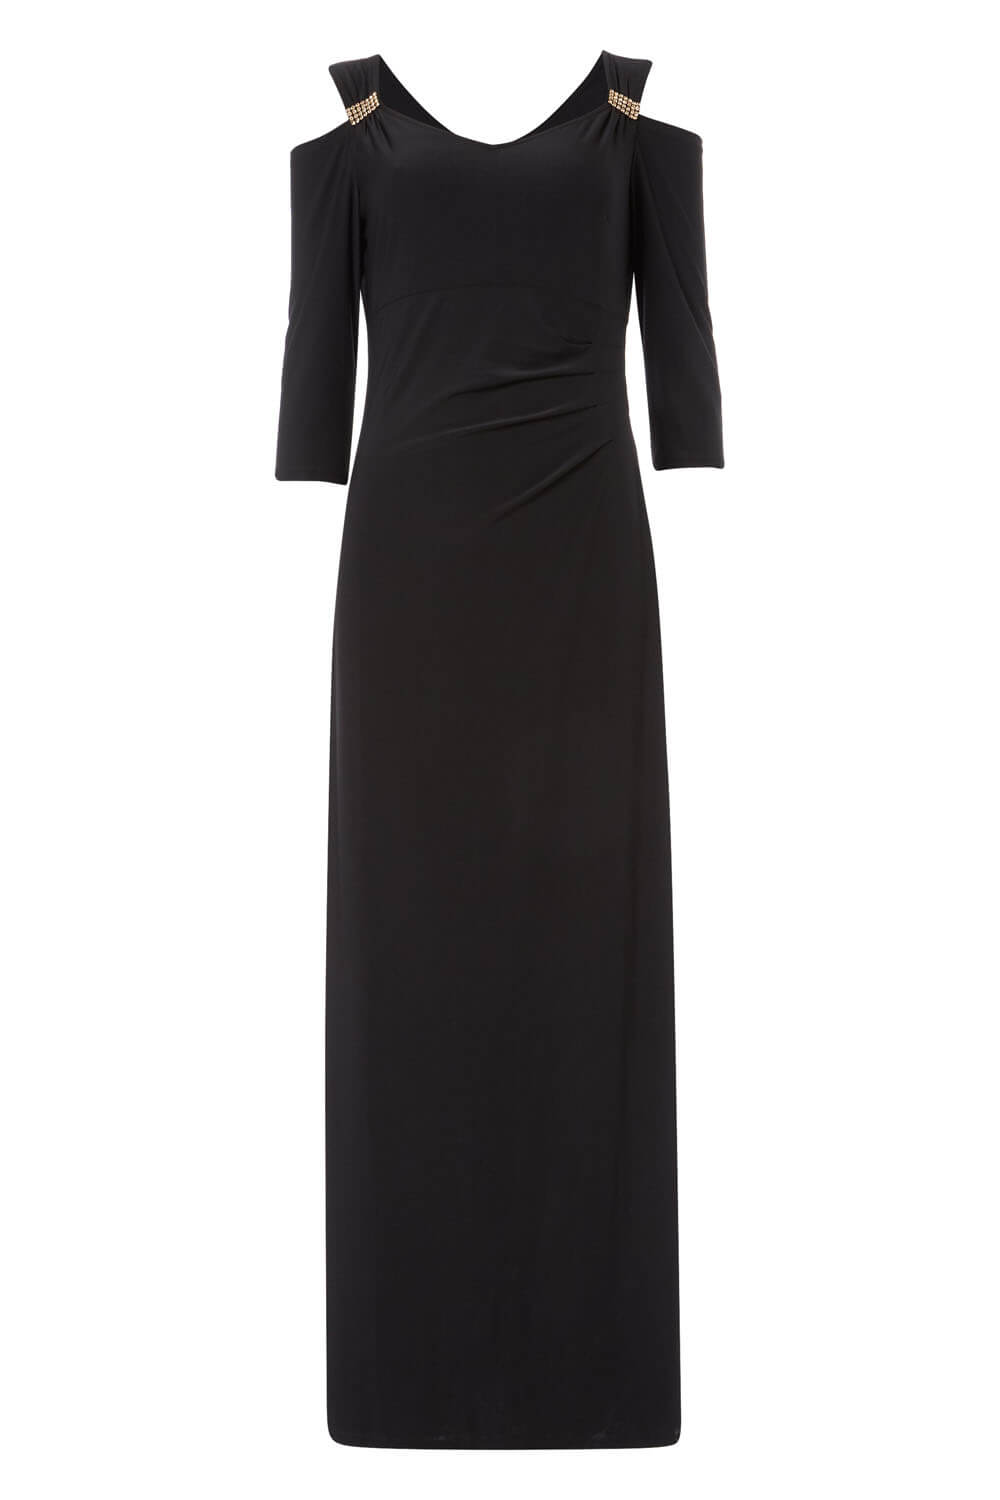 Cold Shoulder Diamante Maxi Dress in Black - Roman Originals UK